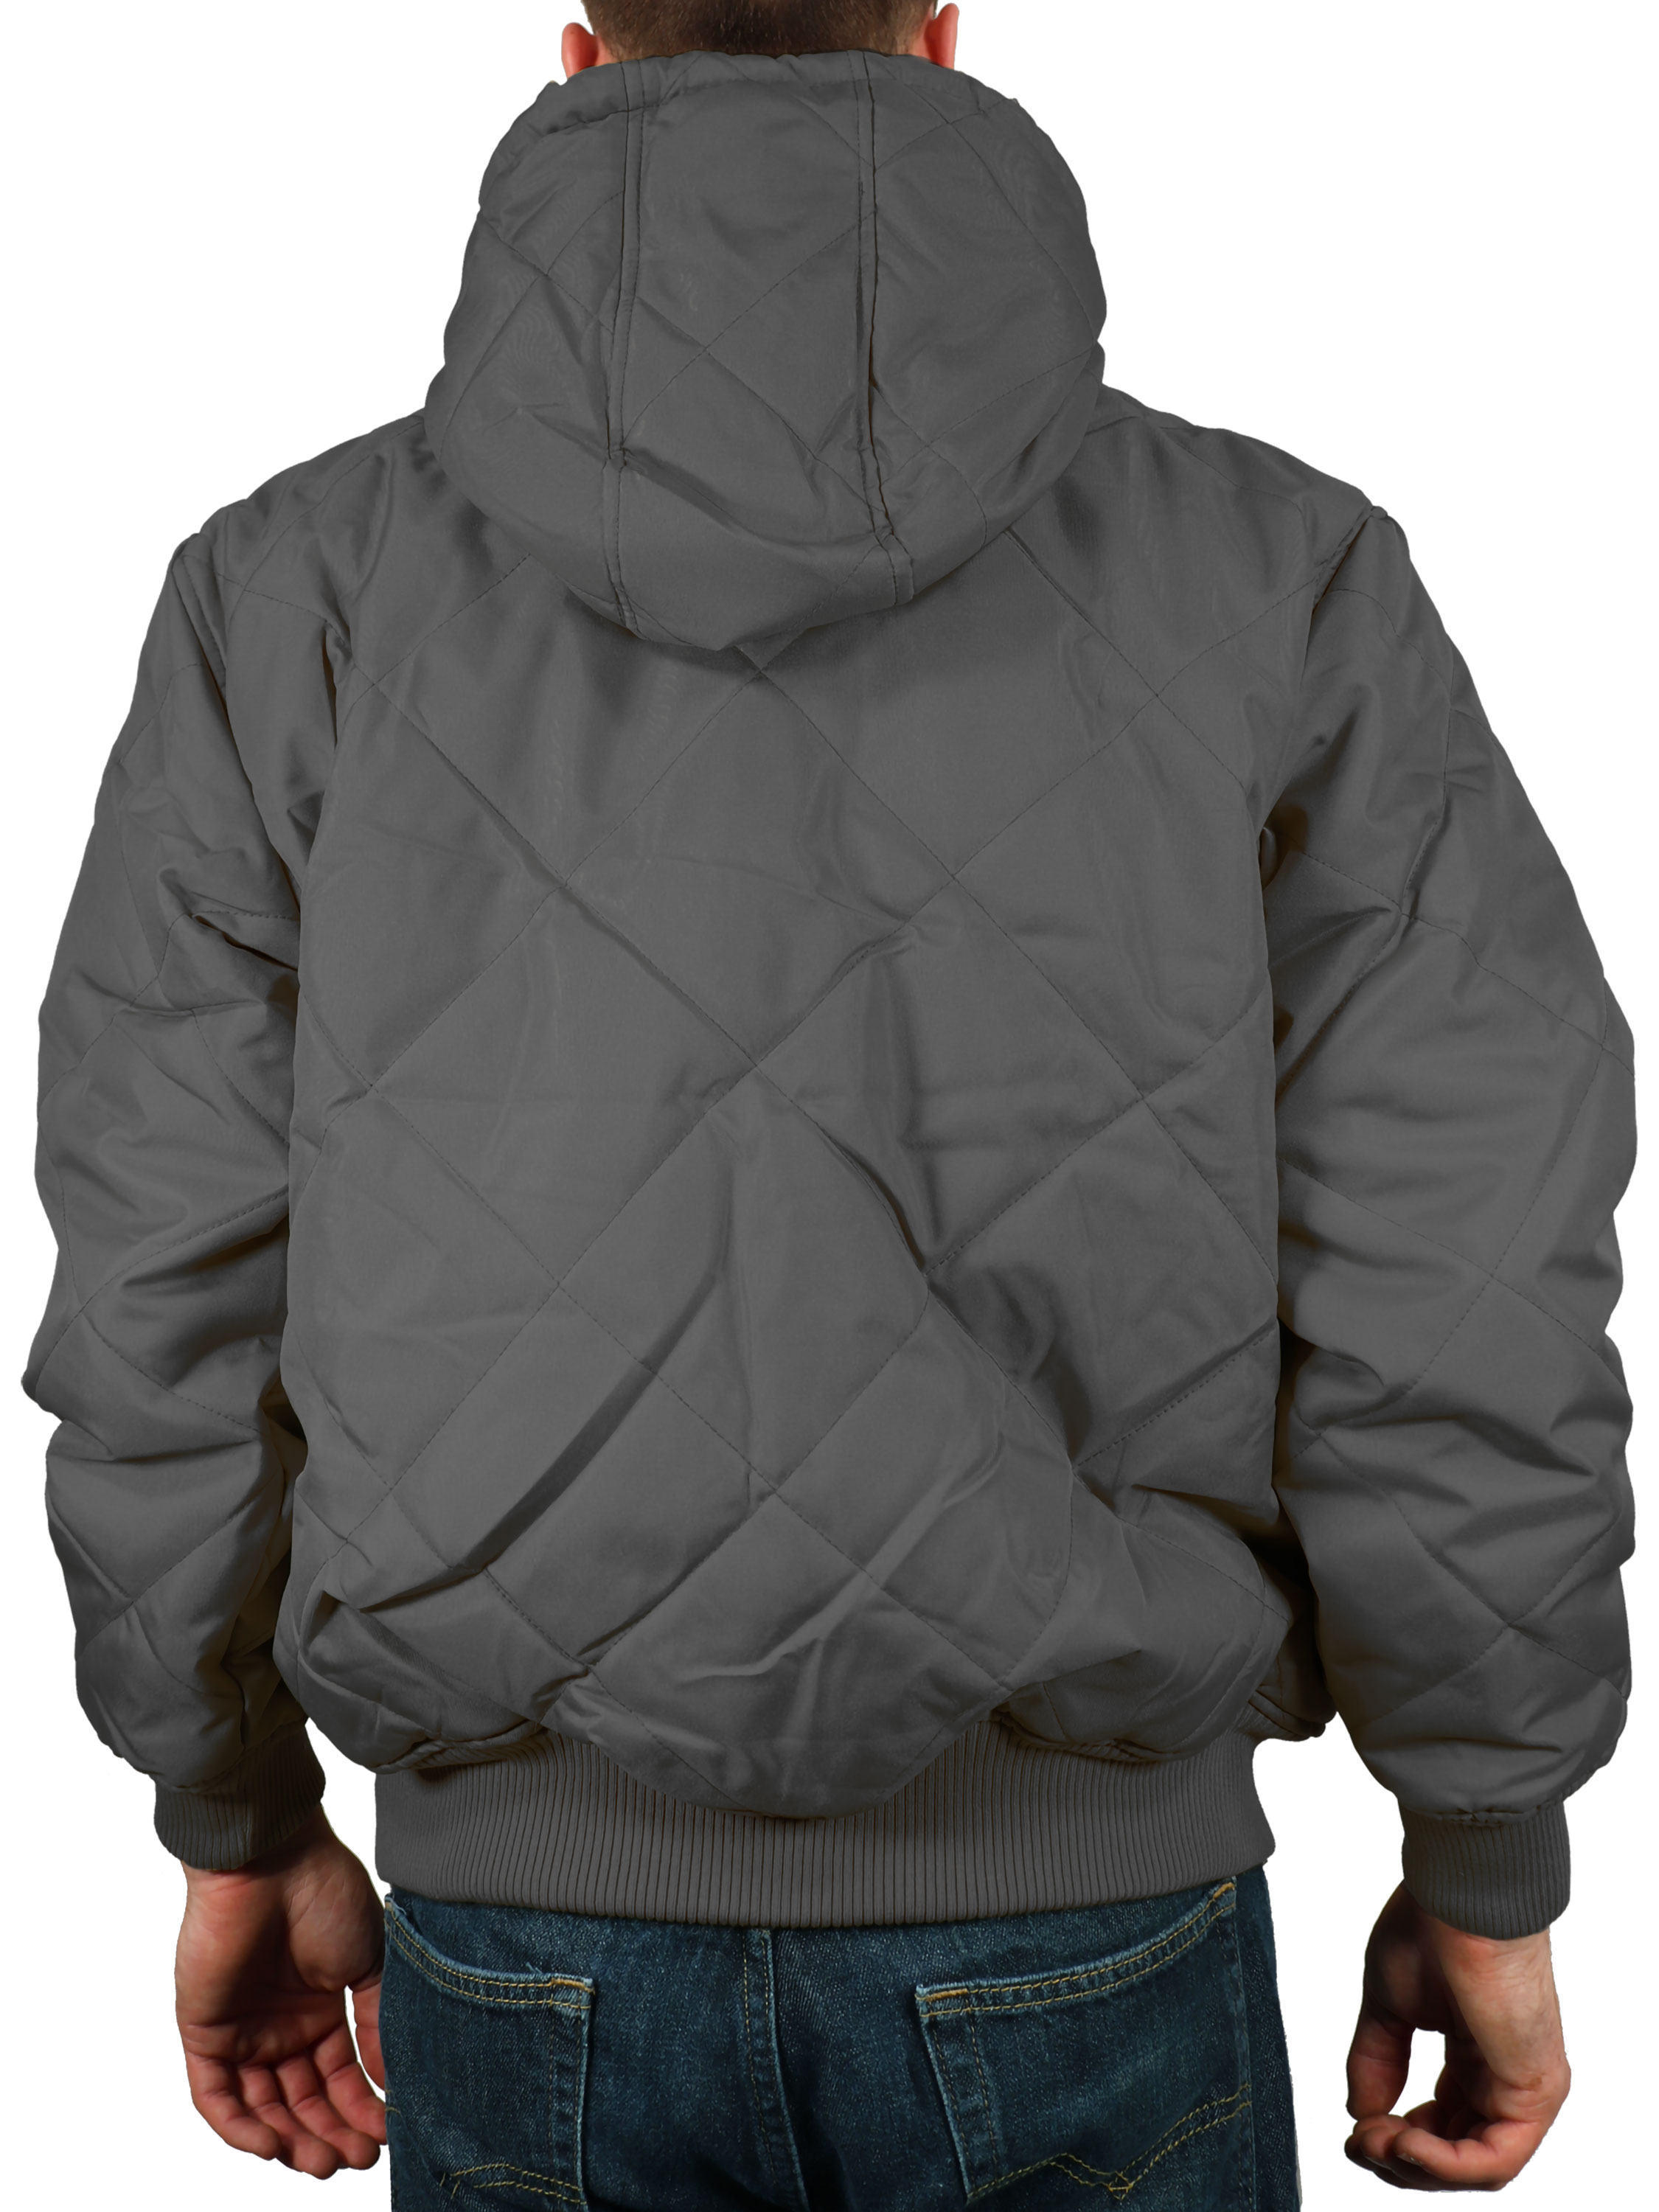 Fensajomon Mens Fleece Winter Warm Button Down Plus Size Quilted Jacket Coat Outerwear